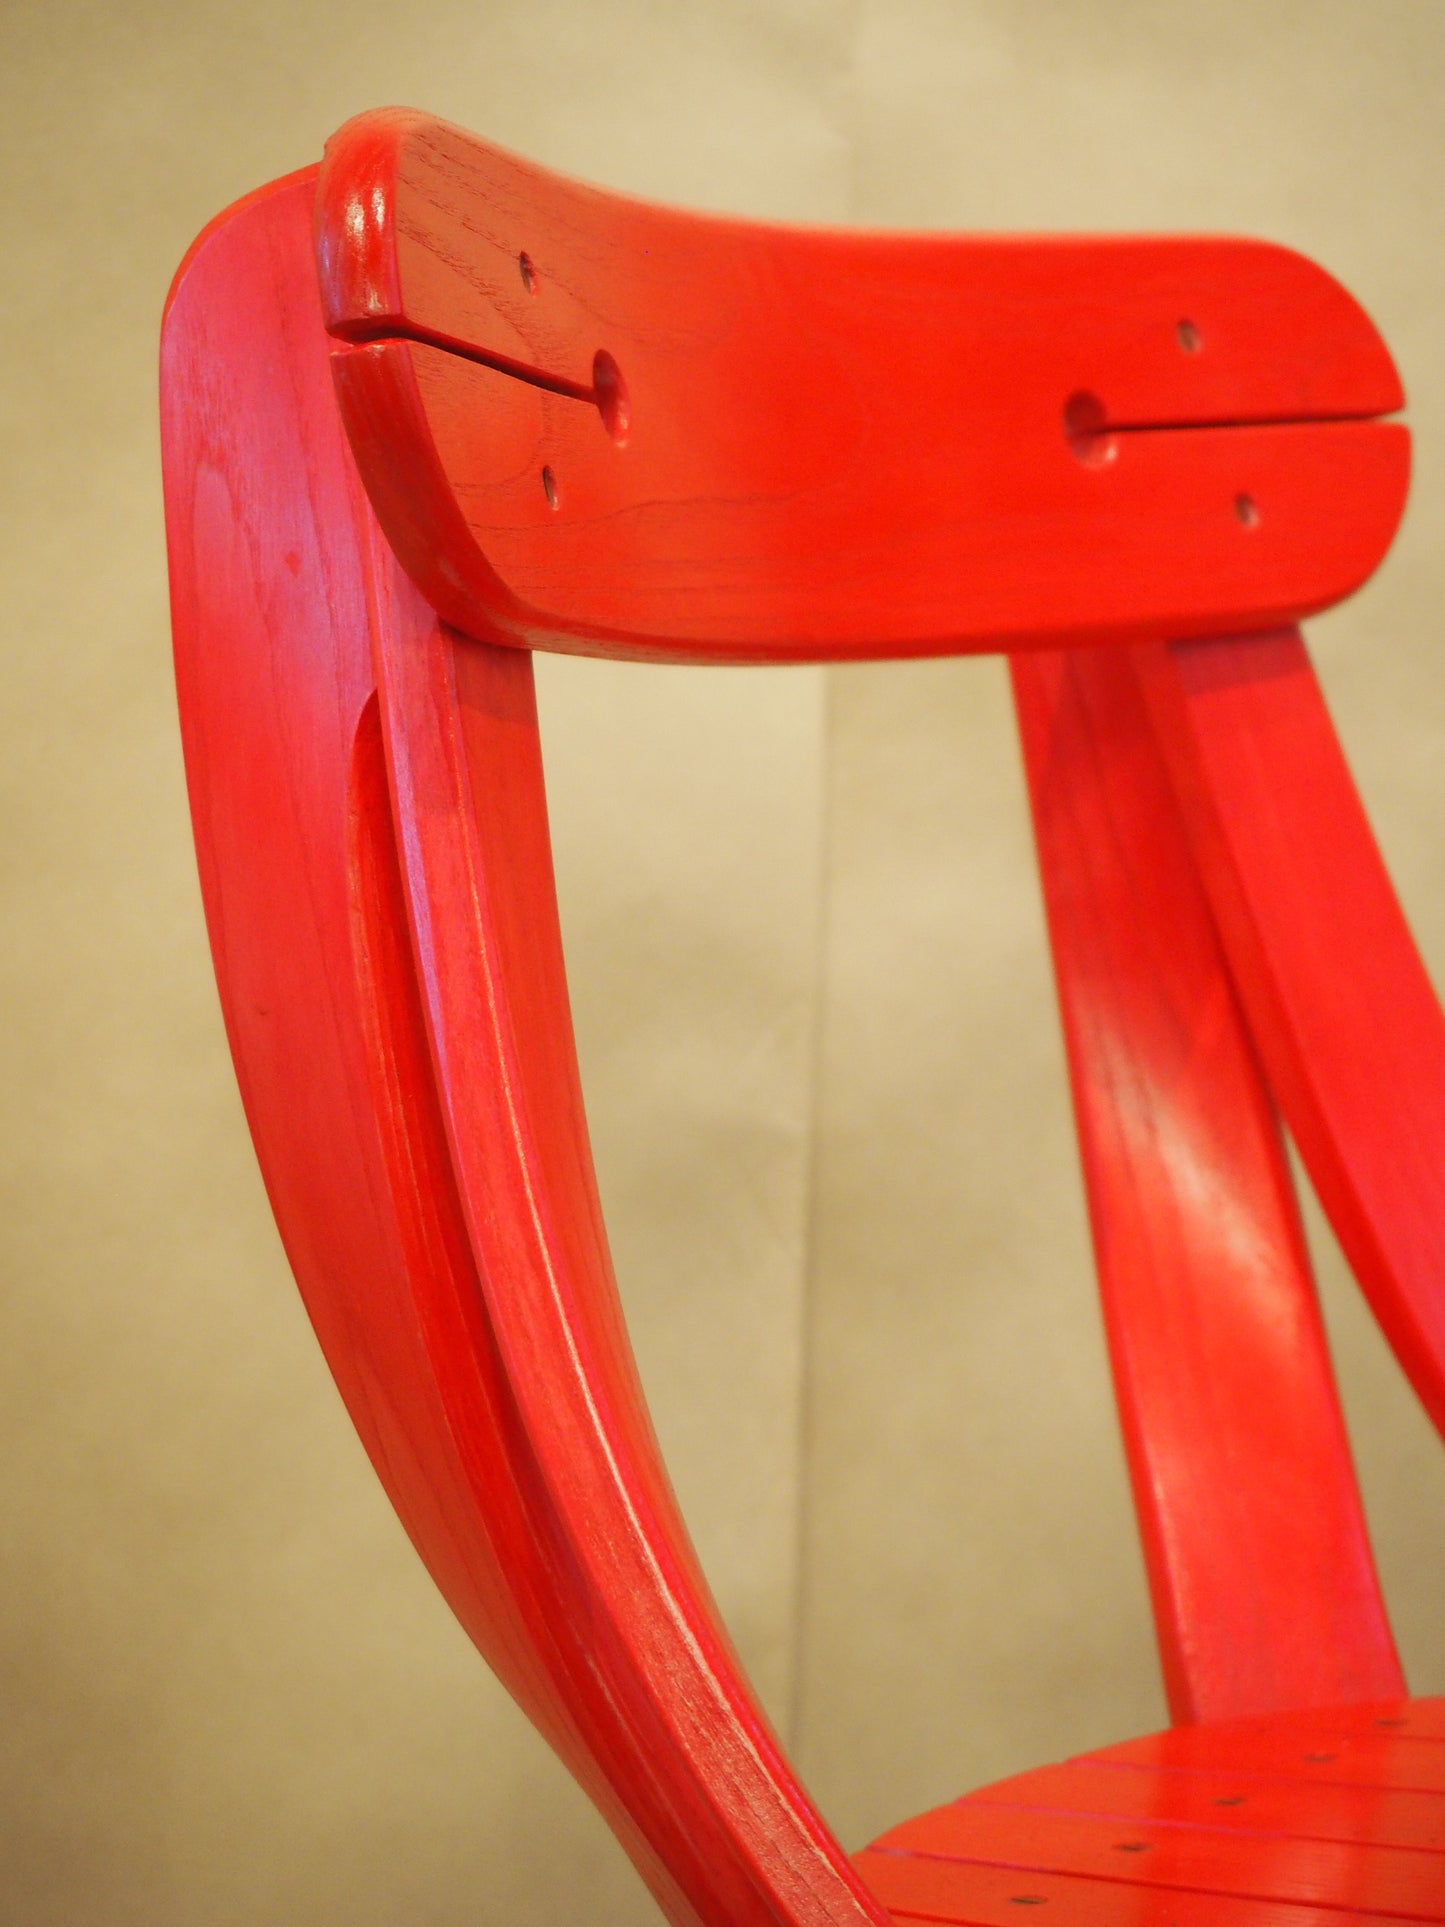 Hussey, Dan – Red Wooden Chair